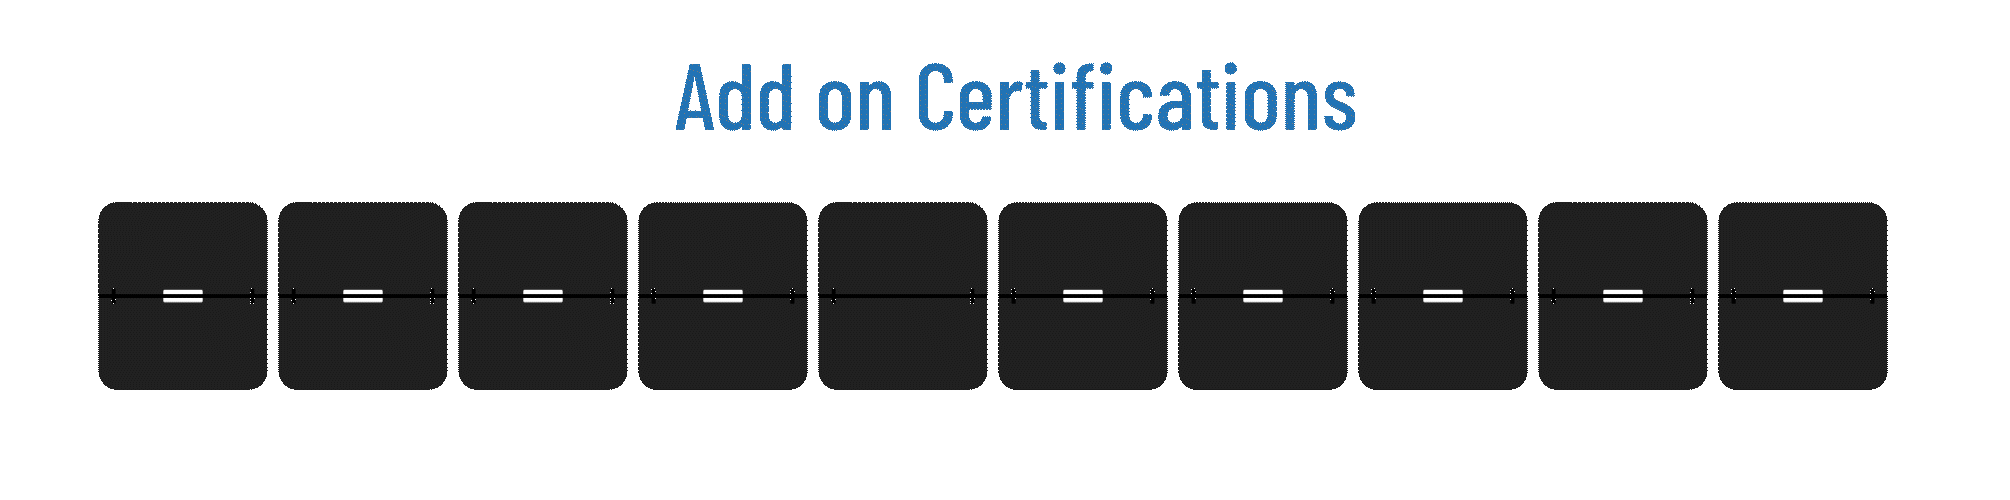 Add-On Certifications: 1-2 Weeks